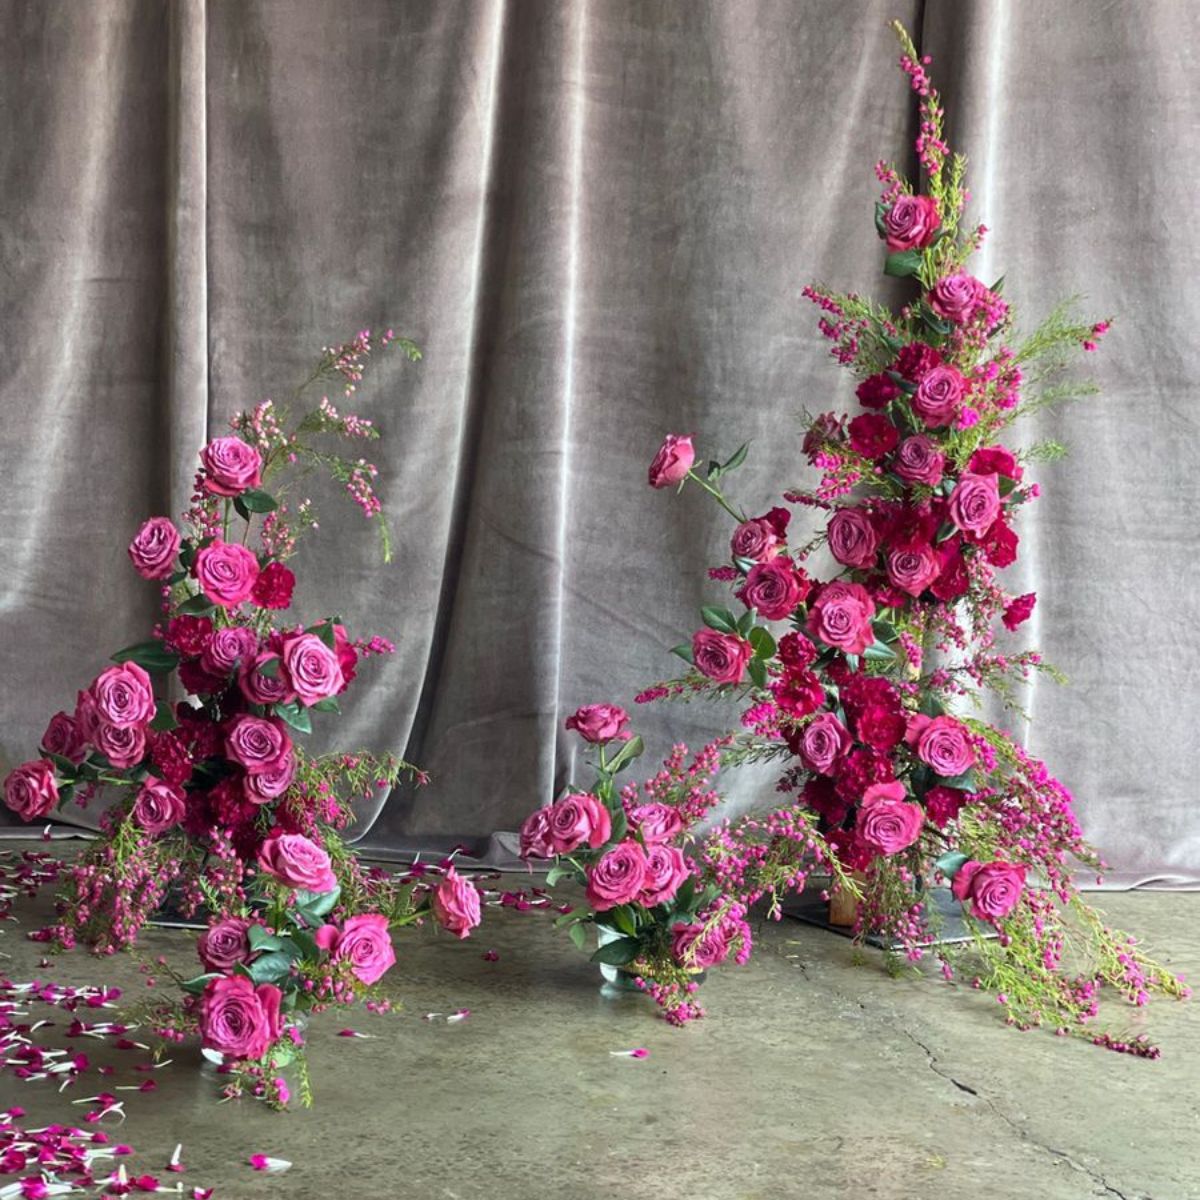 Readers Choice Dolores Vladfor for Every Day Design Garden Rose Design Contest 2022 on Thursd